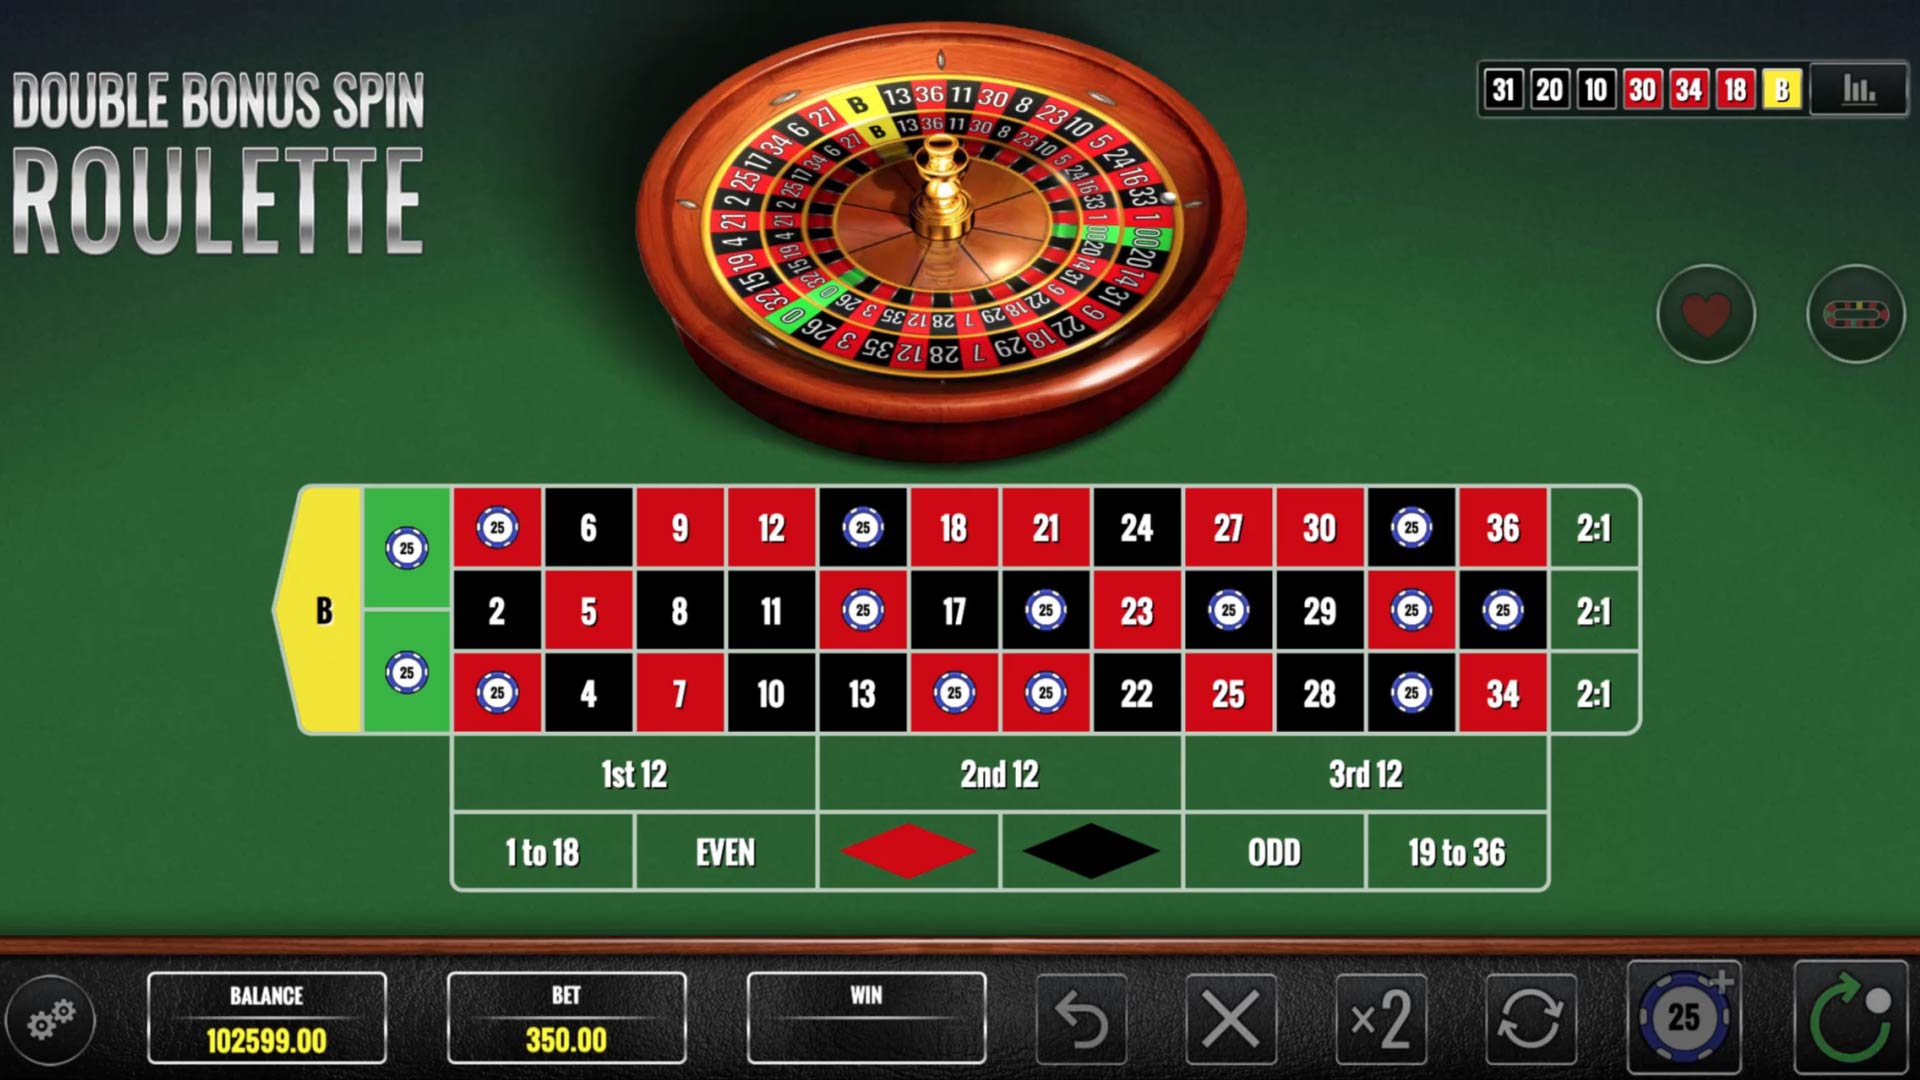 Double Bonus Spin Roulette carousel image 3